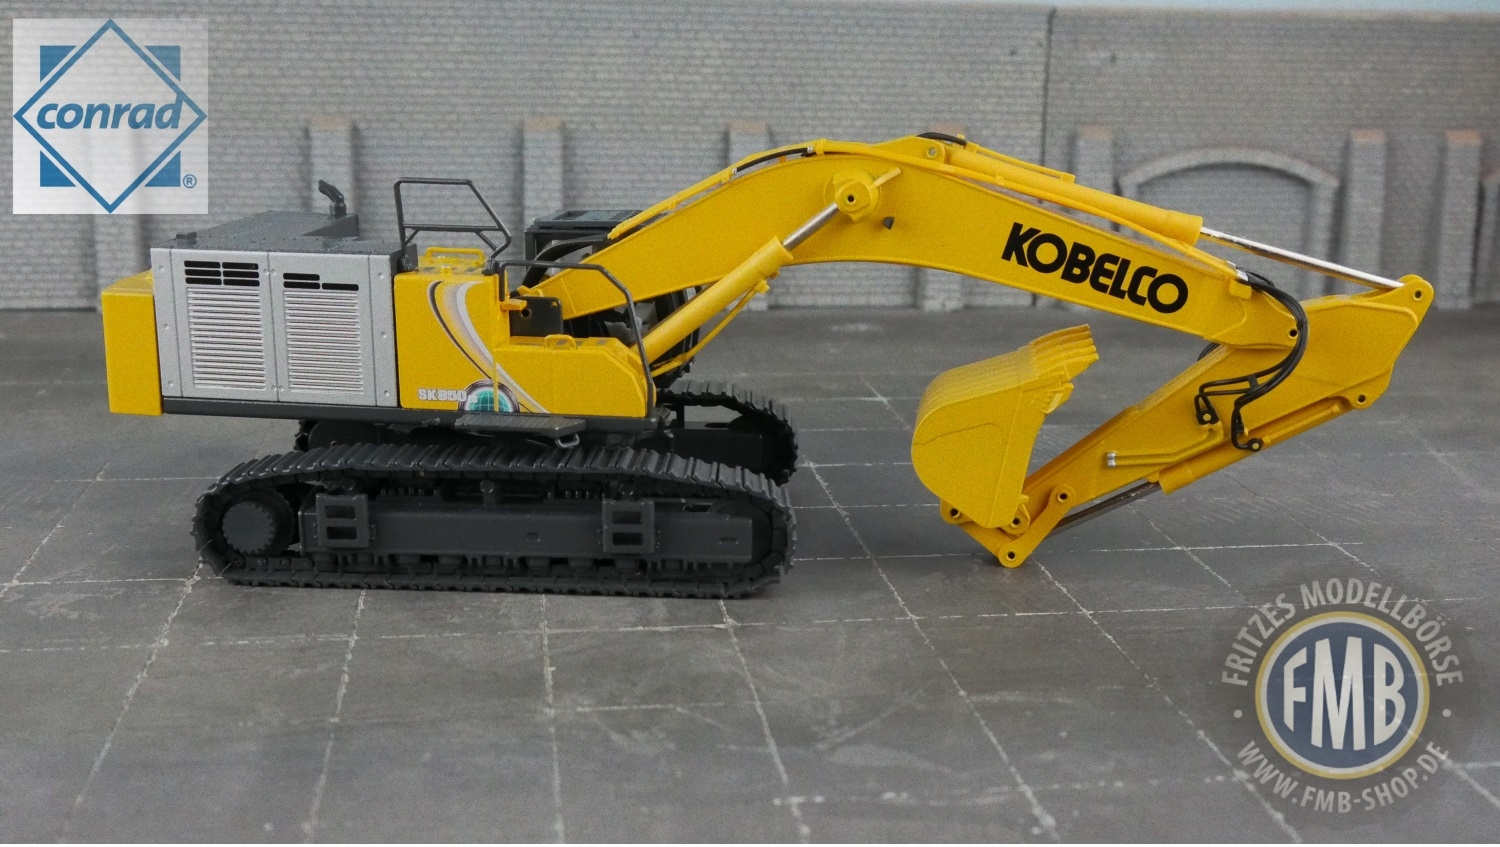 2219/01 - Conrad - Kobelco SK850 LC crawler excavator - yellow - US-Version  -